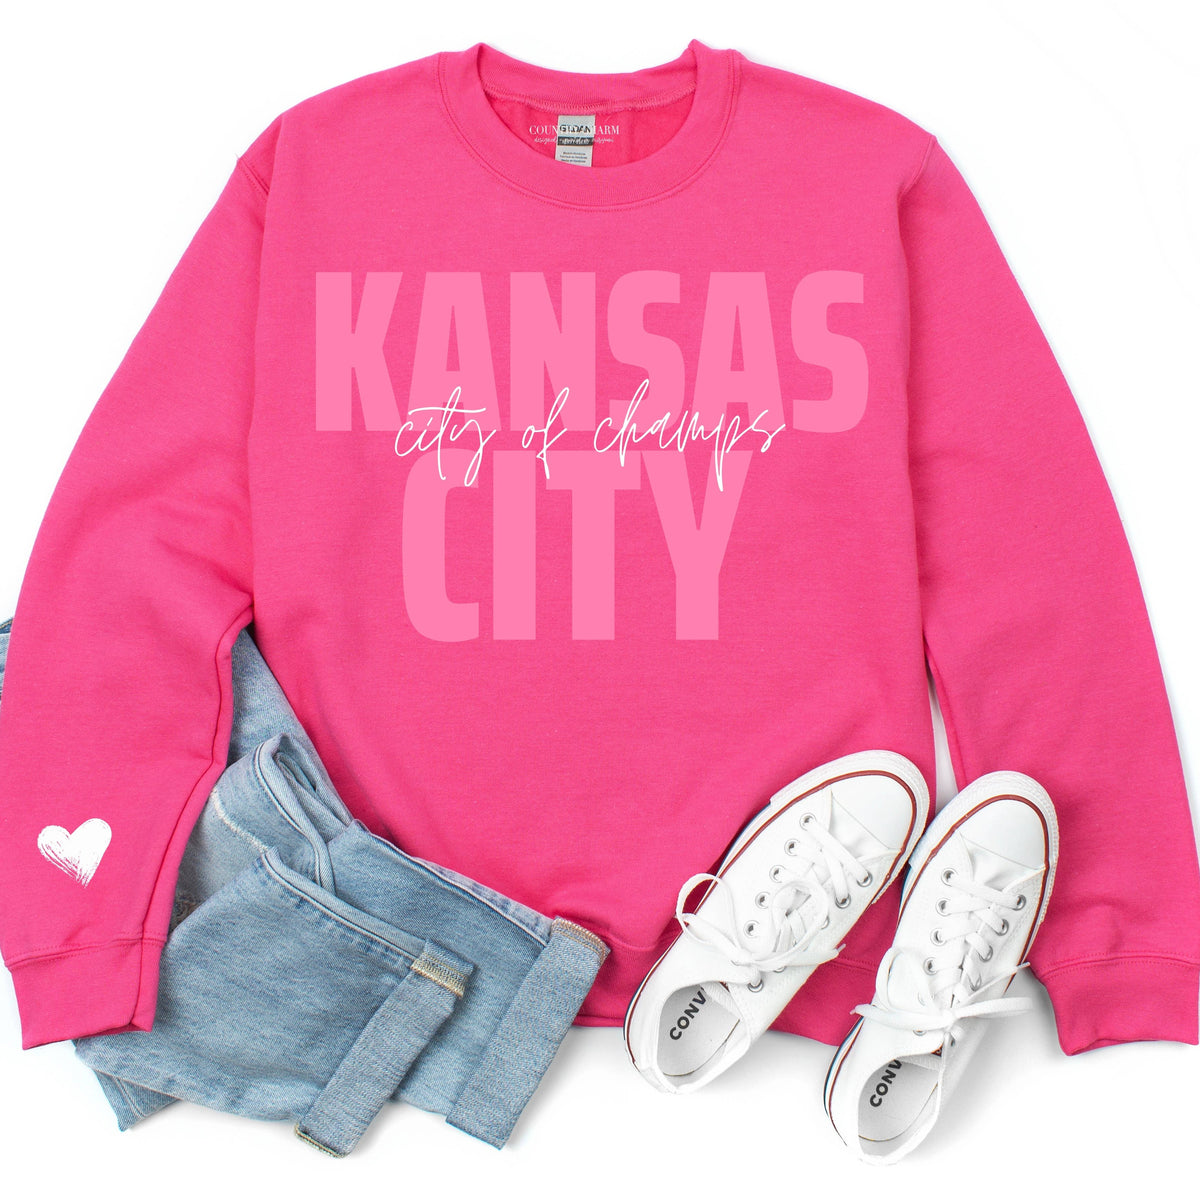 Kansas City | City of Champs + heart sleeve: Large